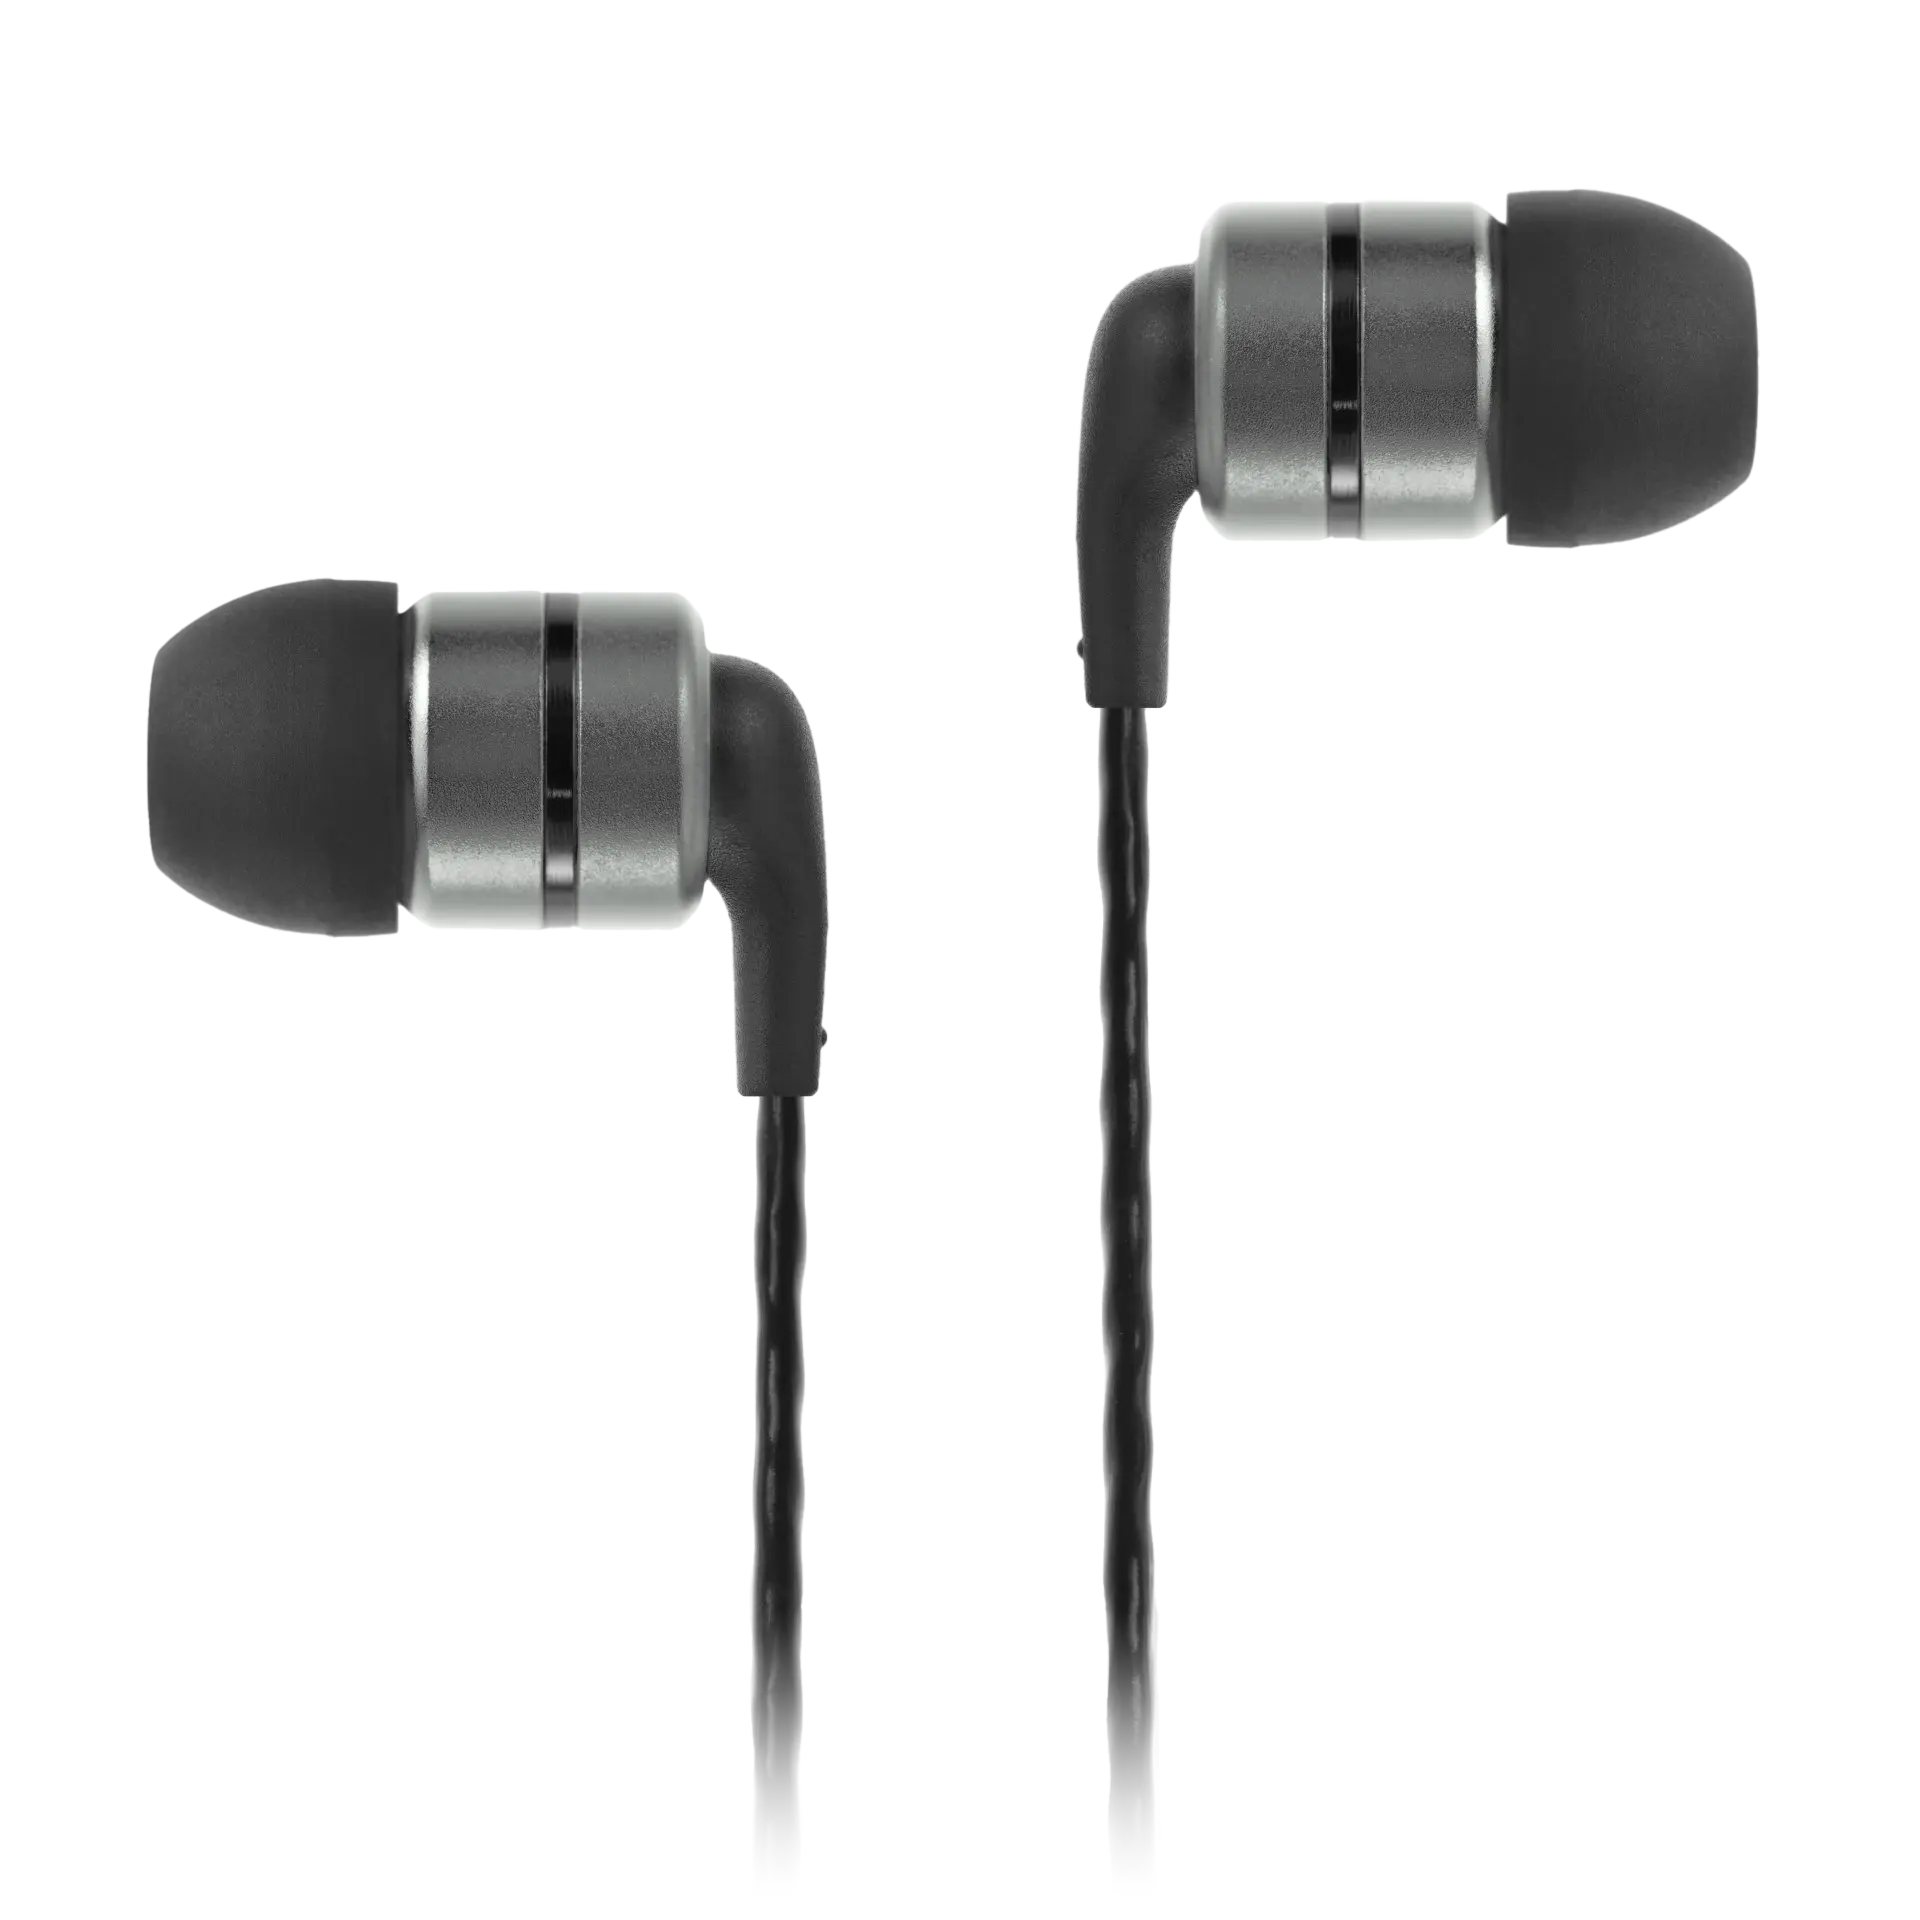 SoundMAGIC E80 - In Ear Isolating Earphones